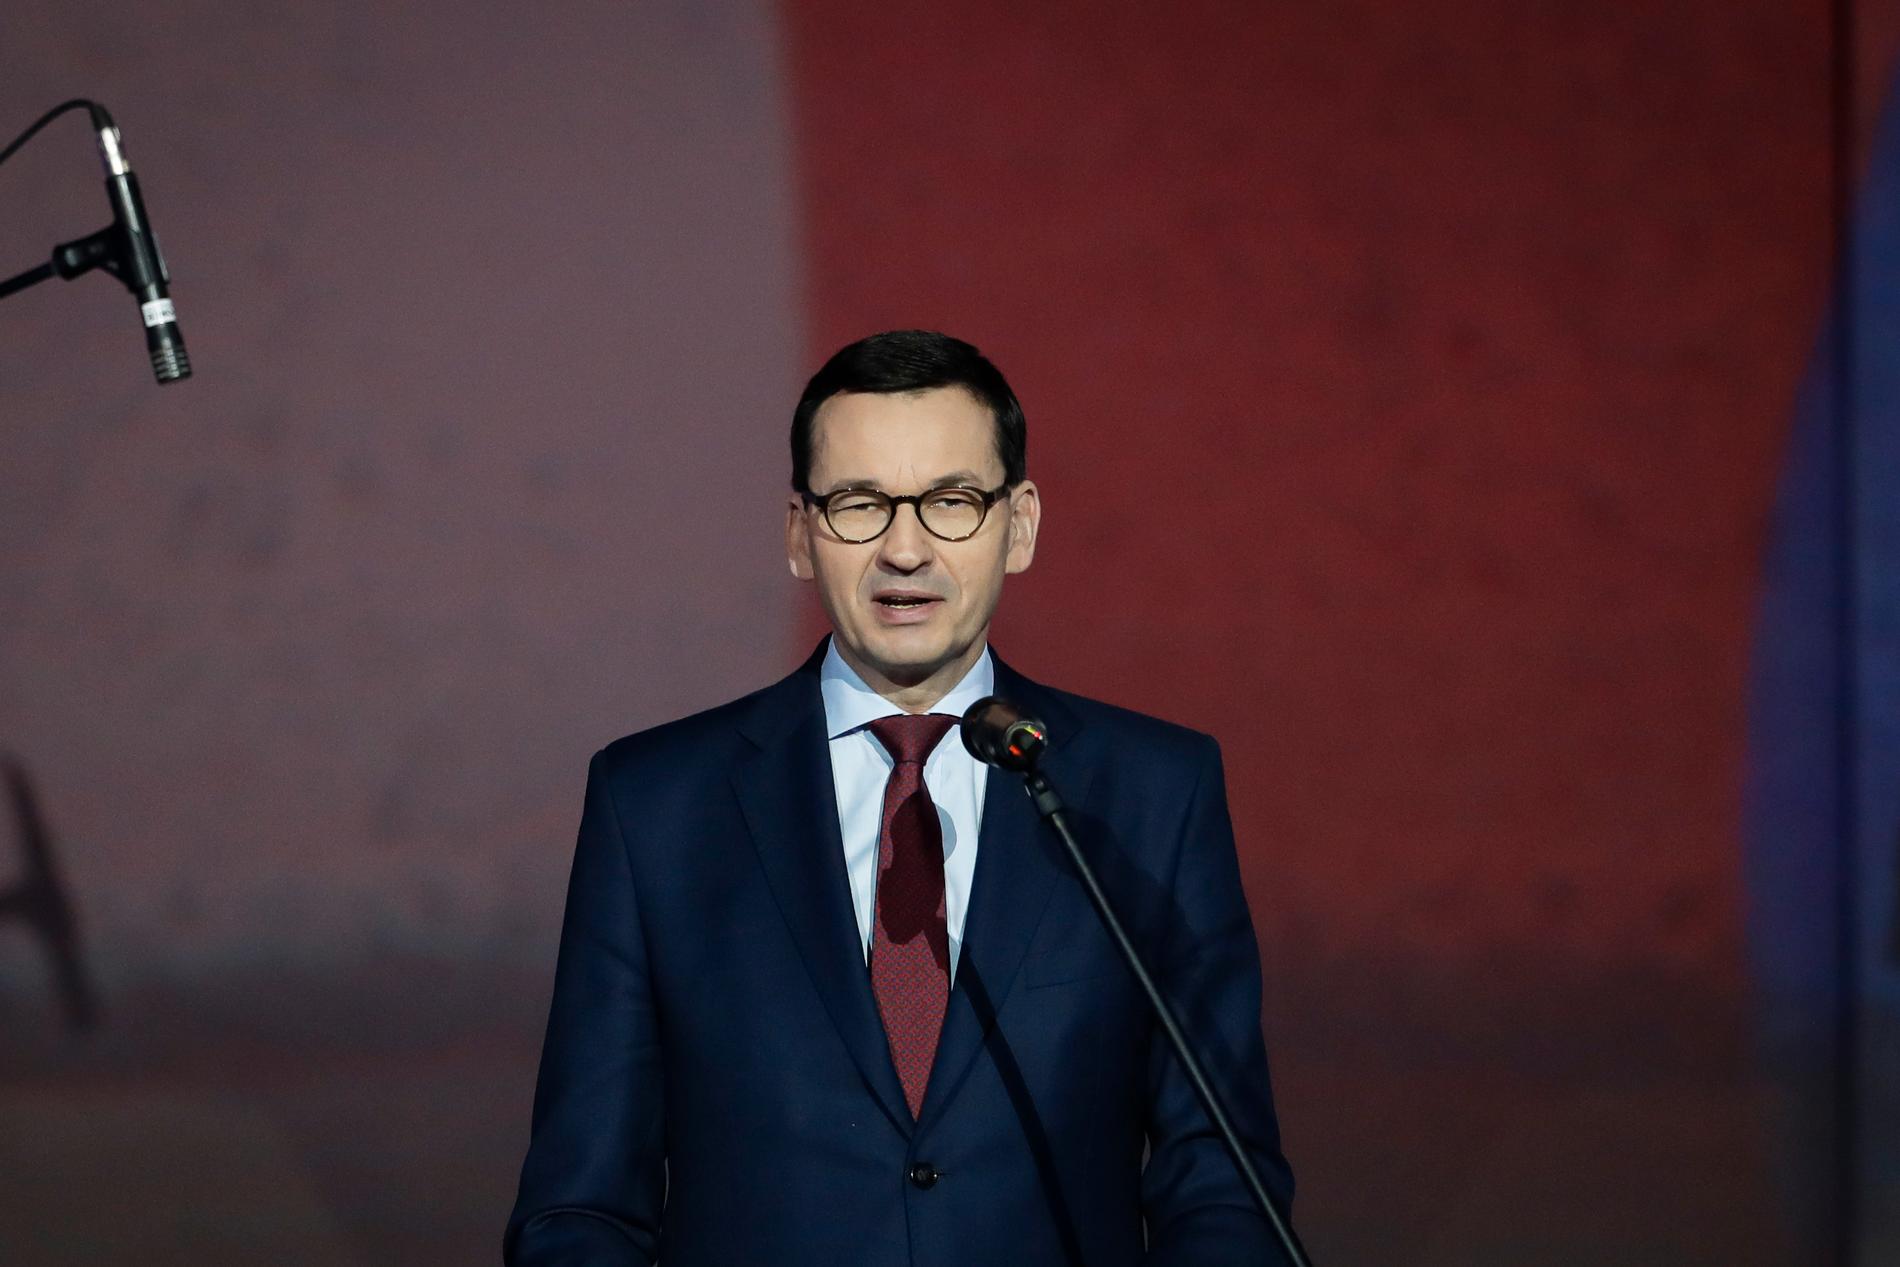 Polens premiärminister Mateusz Morawiecki. Arkivbild.